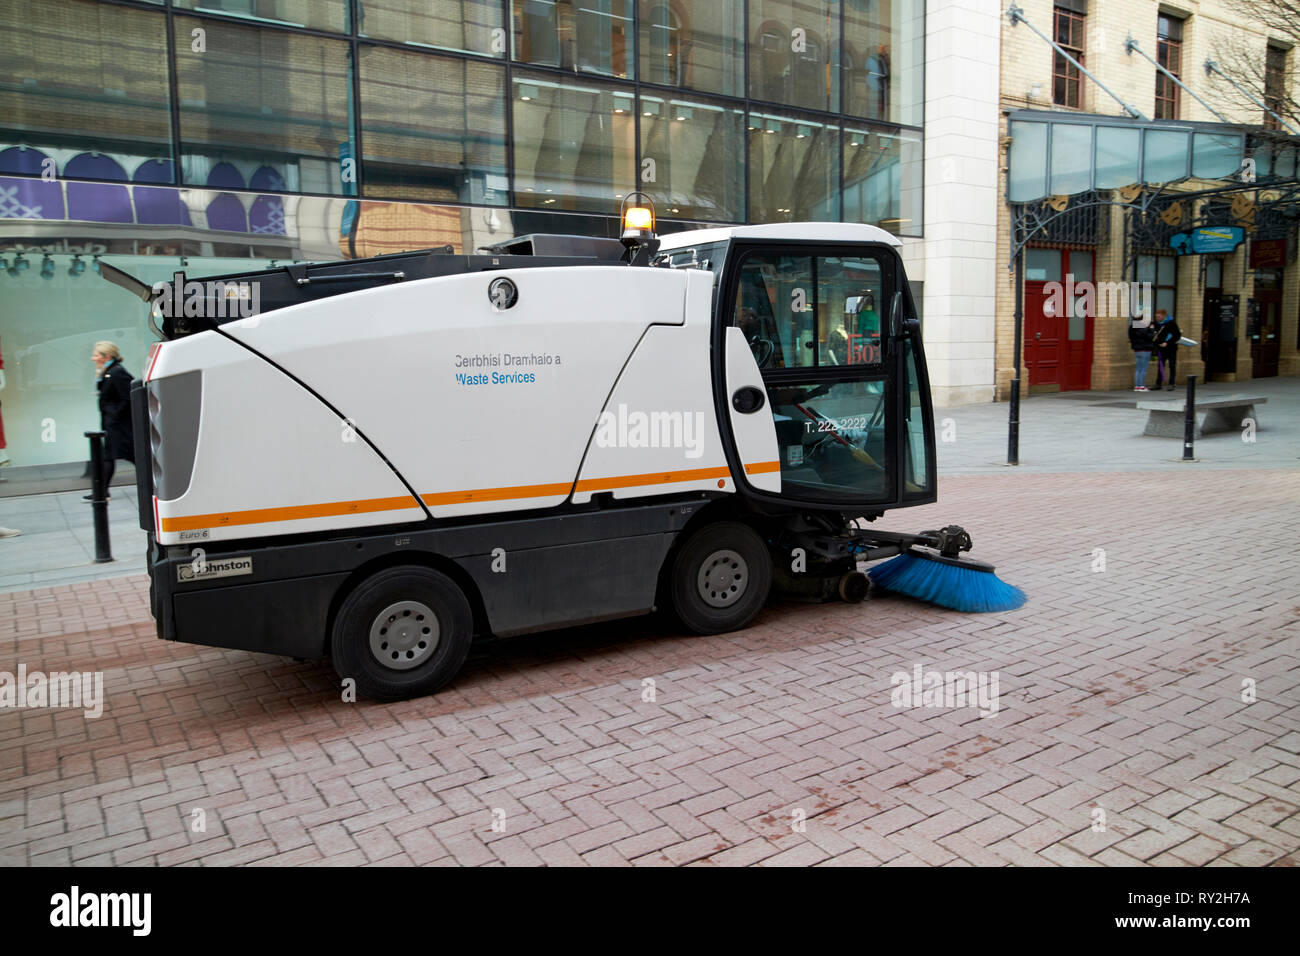 Dublin City Council Abfall Dienstleistungen Street Sweeper Reinigung Straßen Dublin Irland Europa Stockfoto